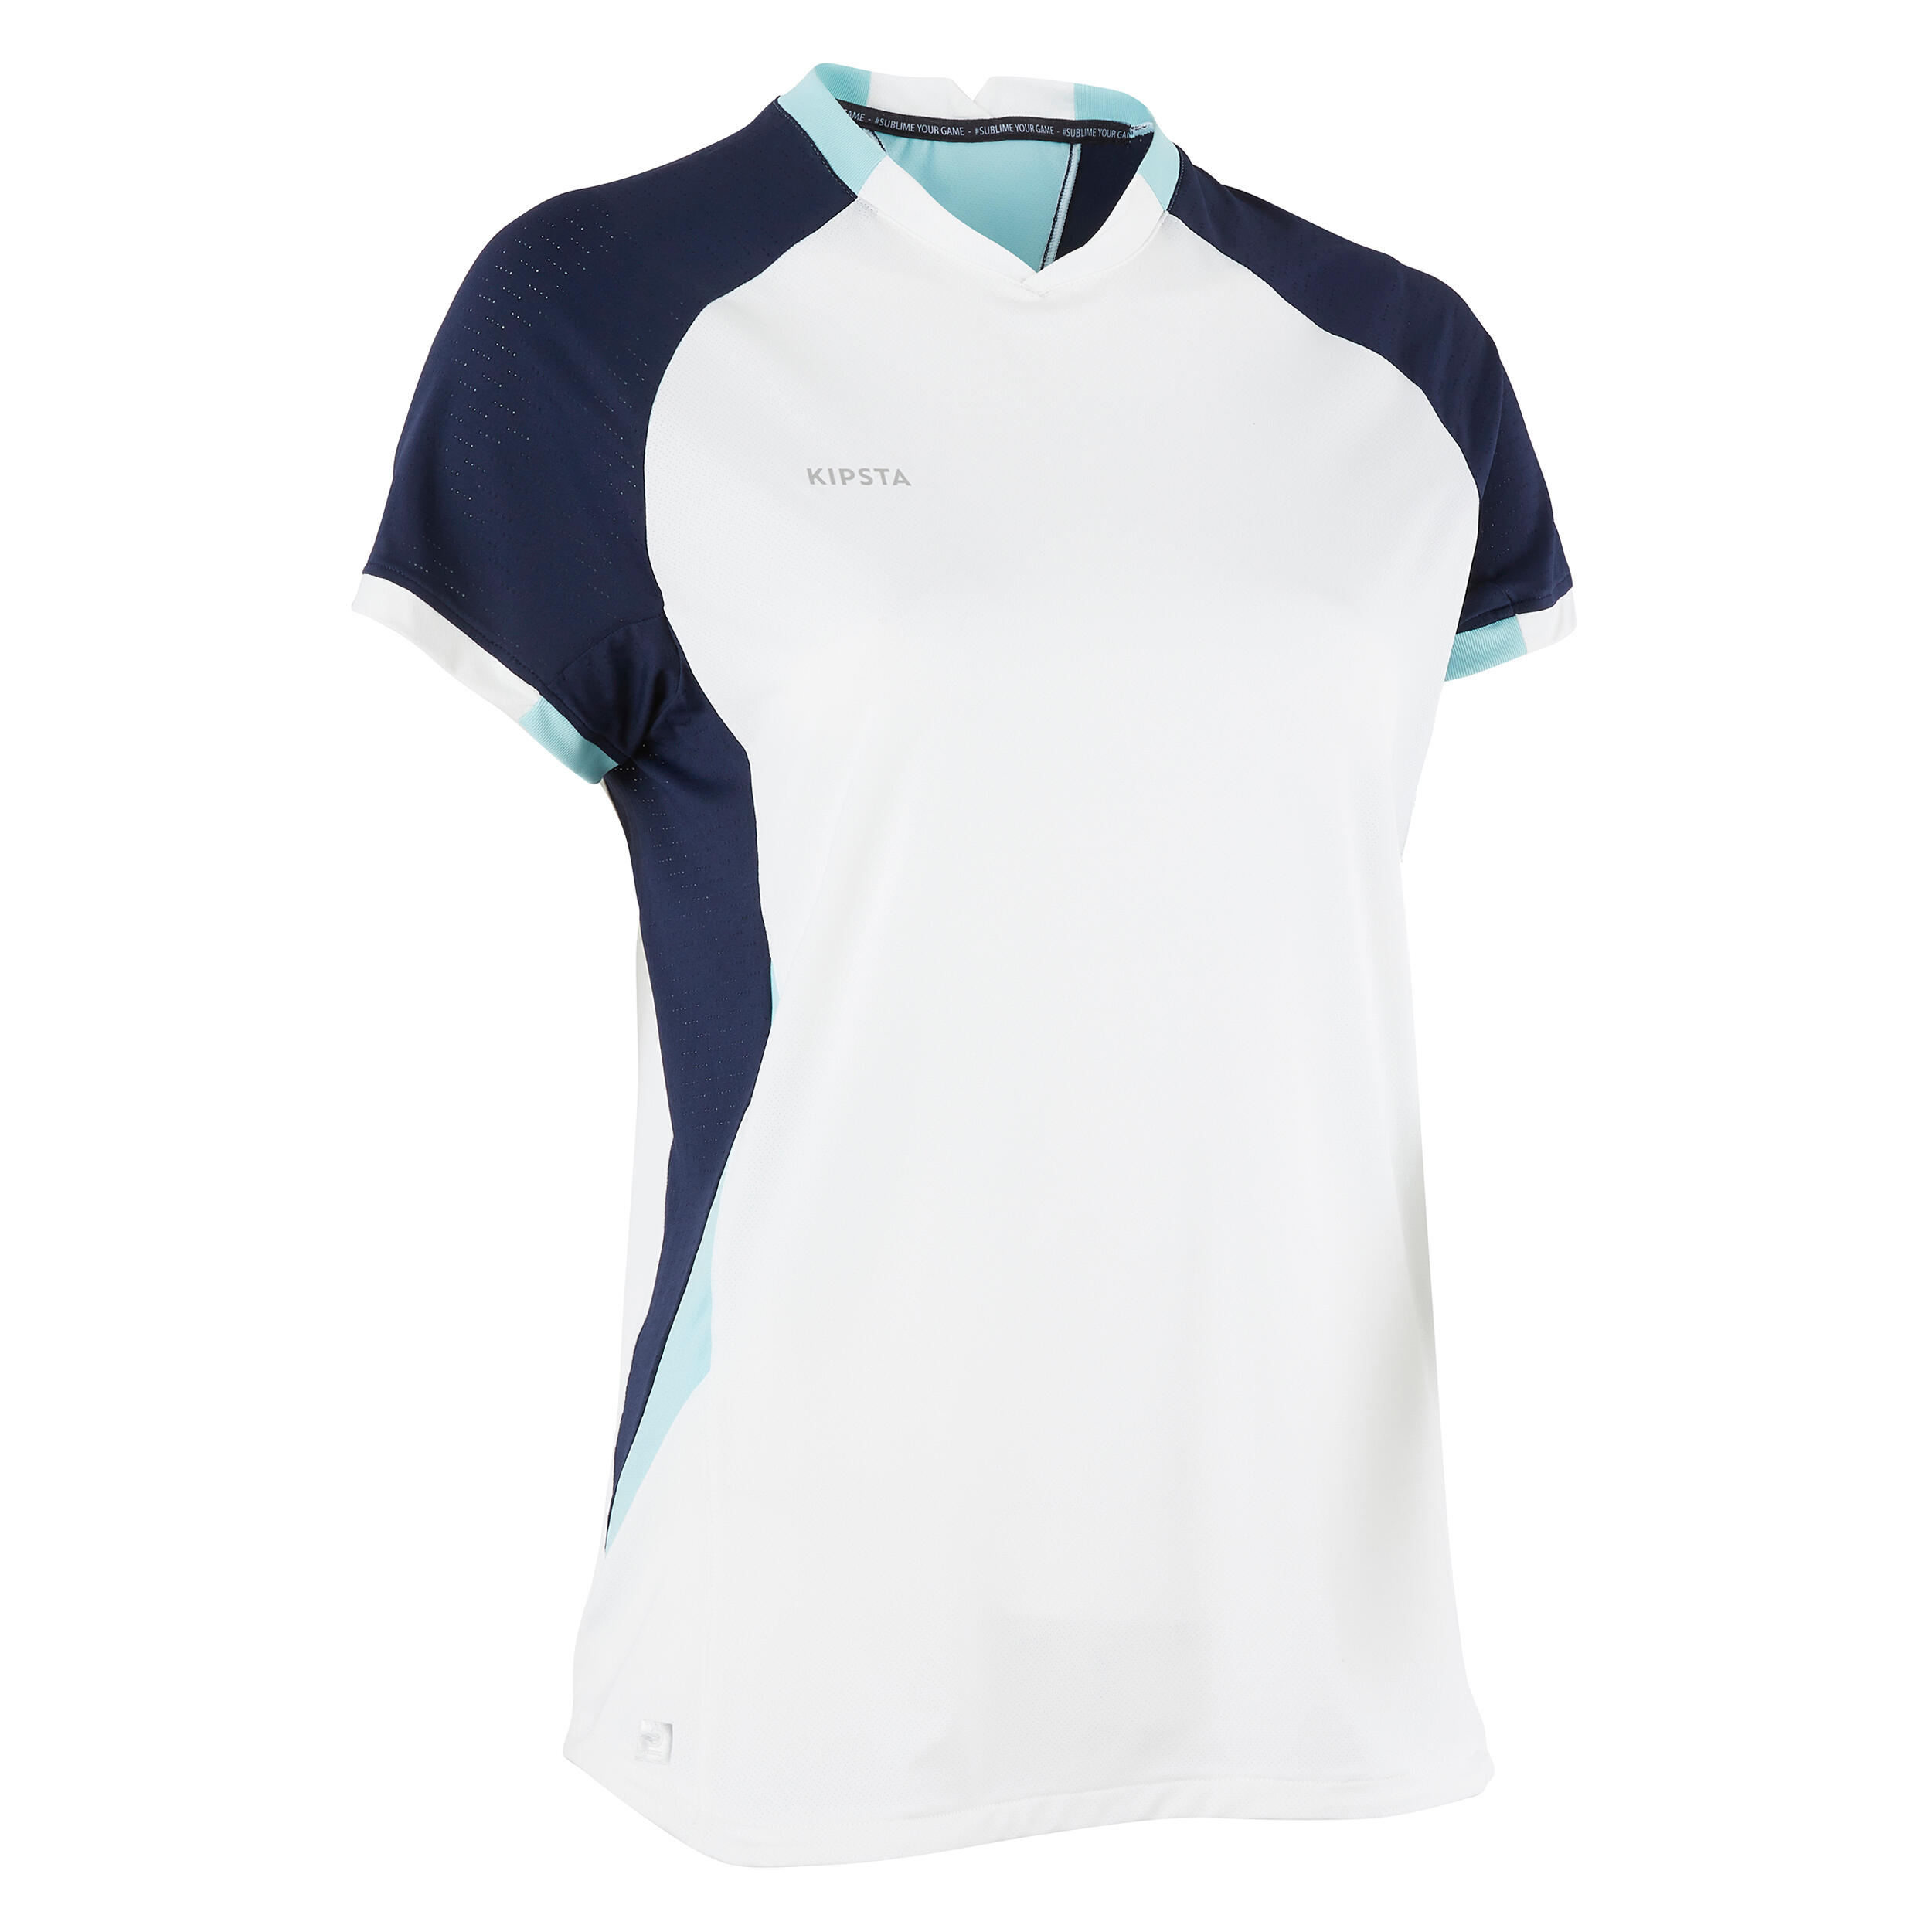 KIPSTA Women's S-S Straight-Cut Football Shirt - White